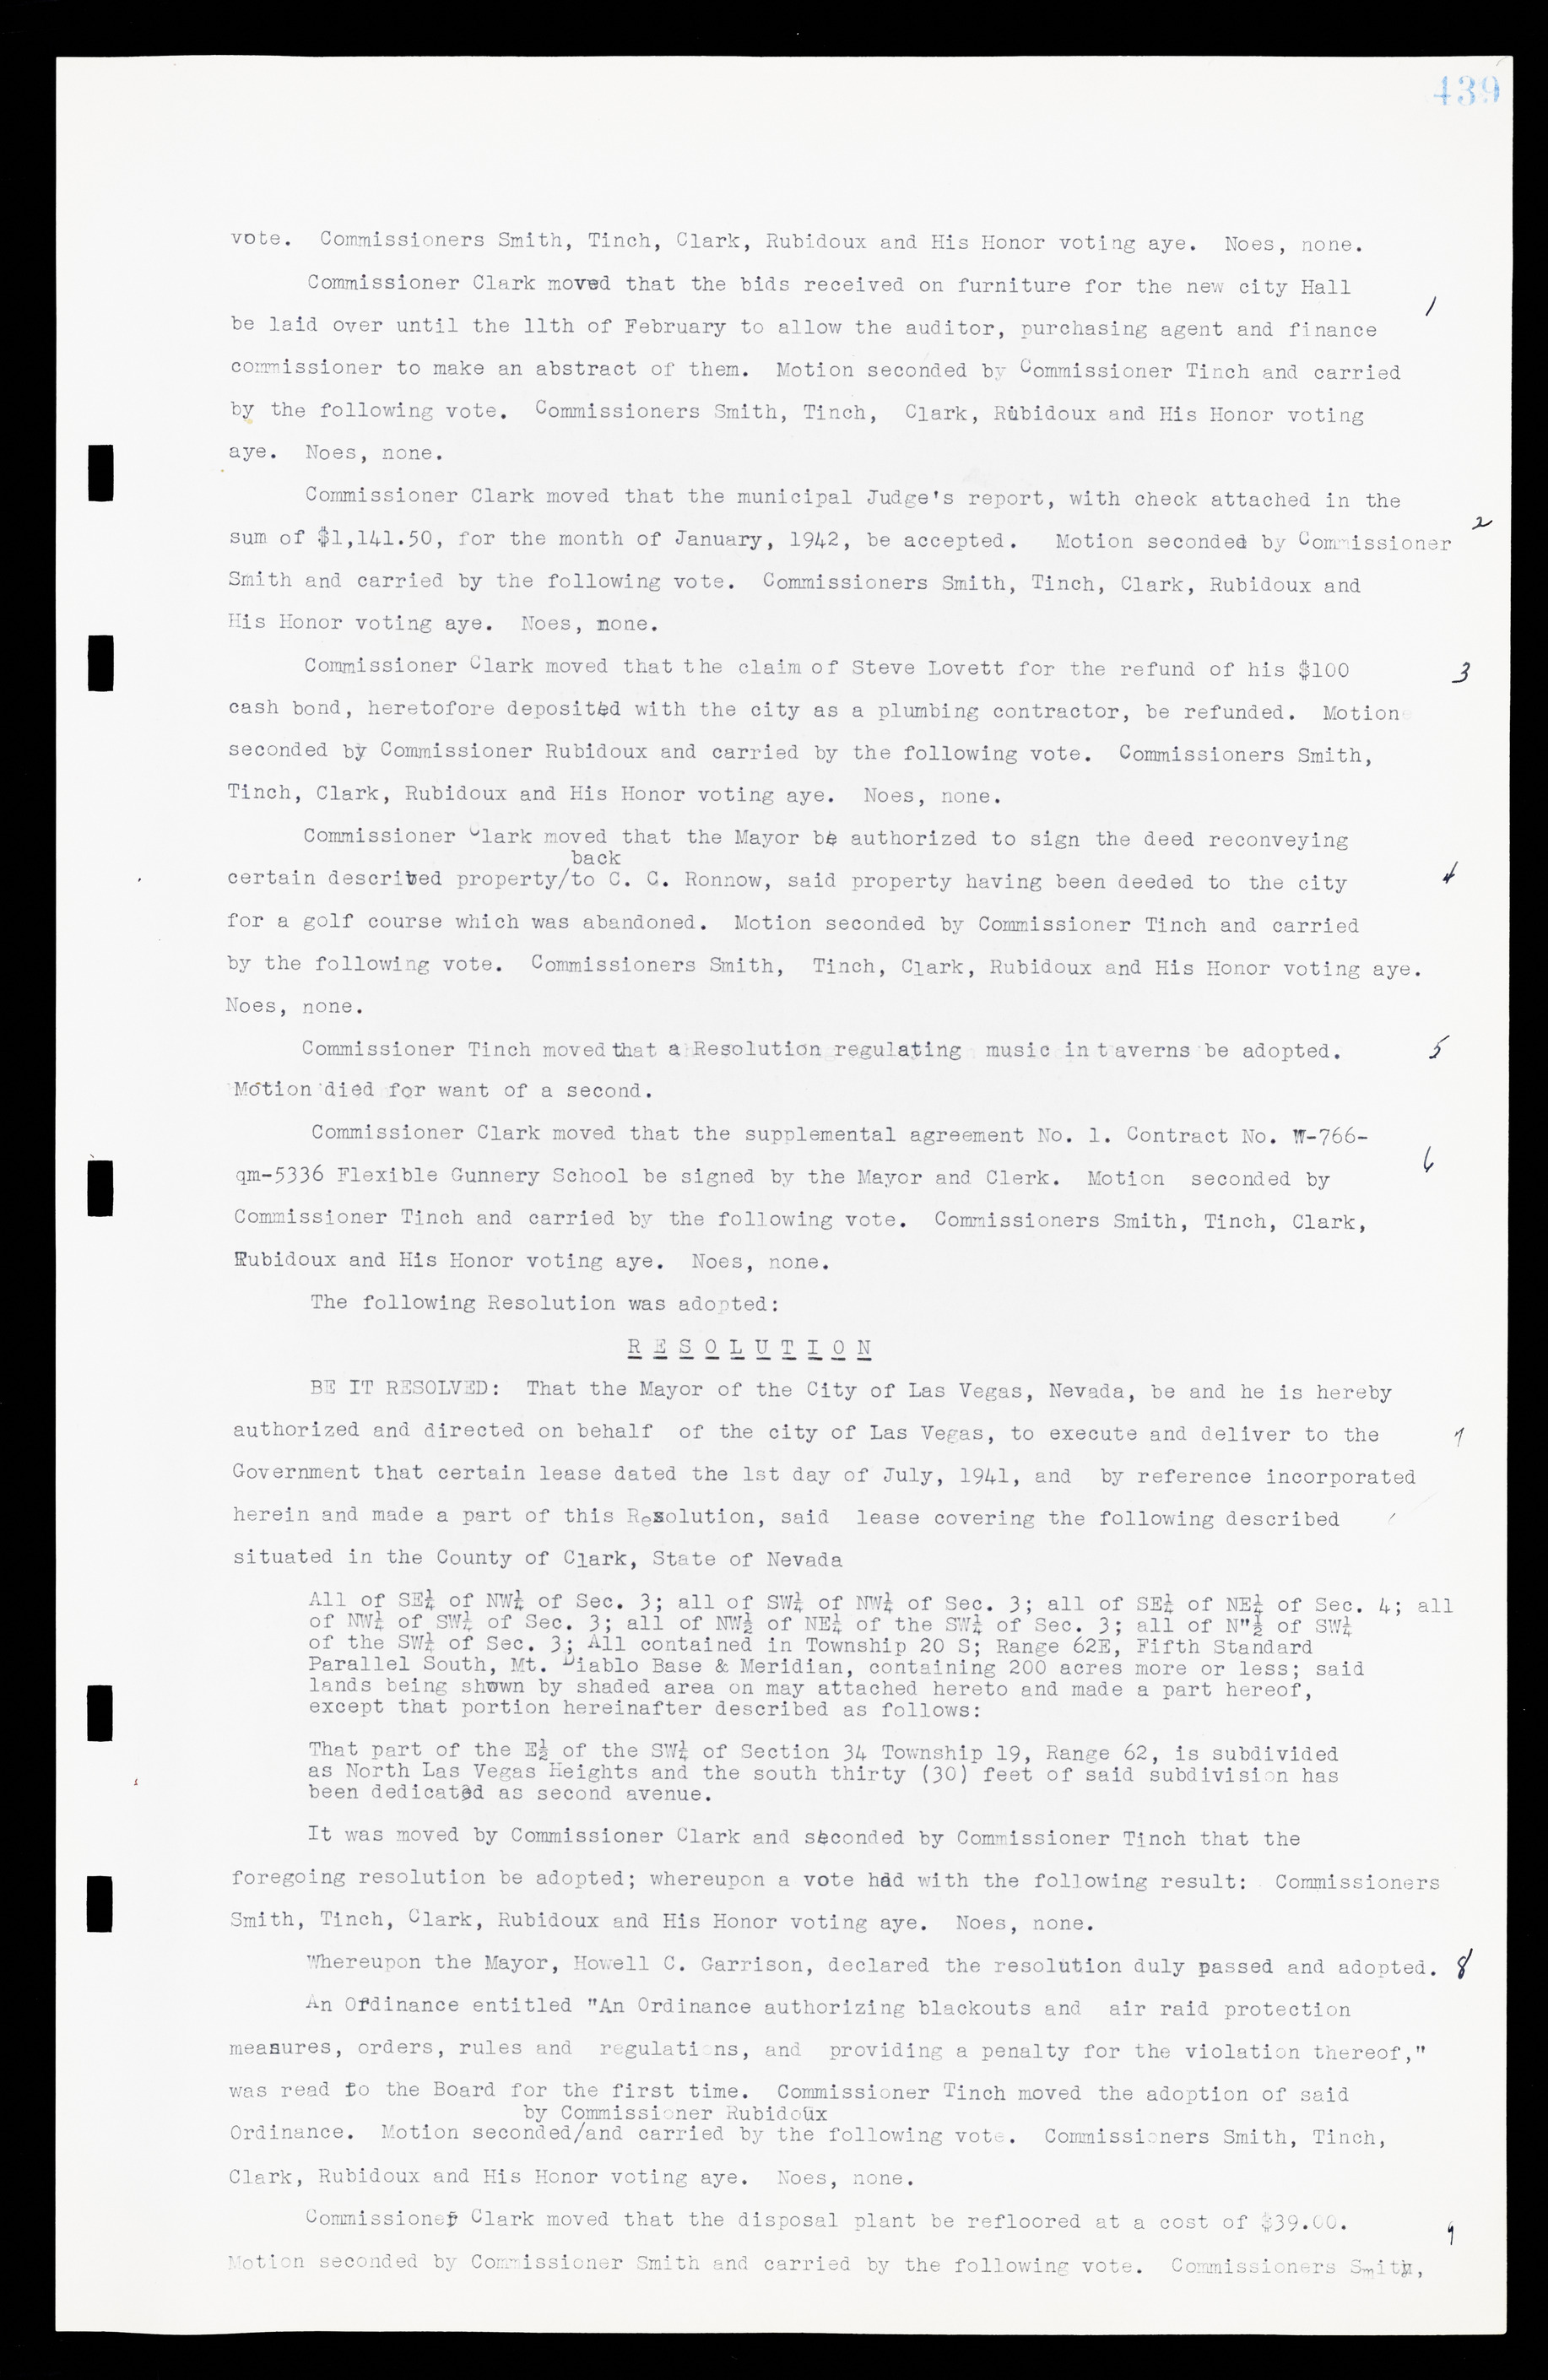 Las Vegas City Commission Minutes, February 17, 1937 to August 4, 1942, lvc000004-467